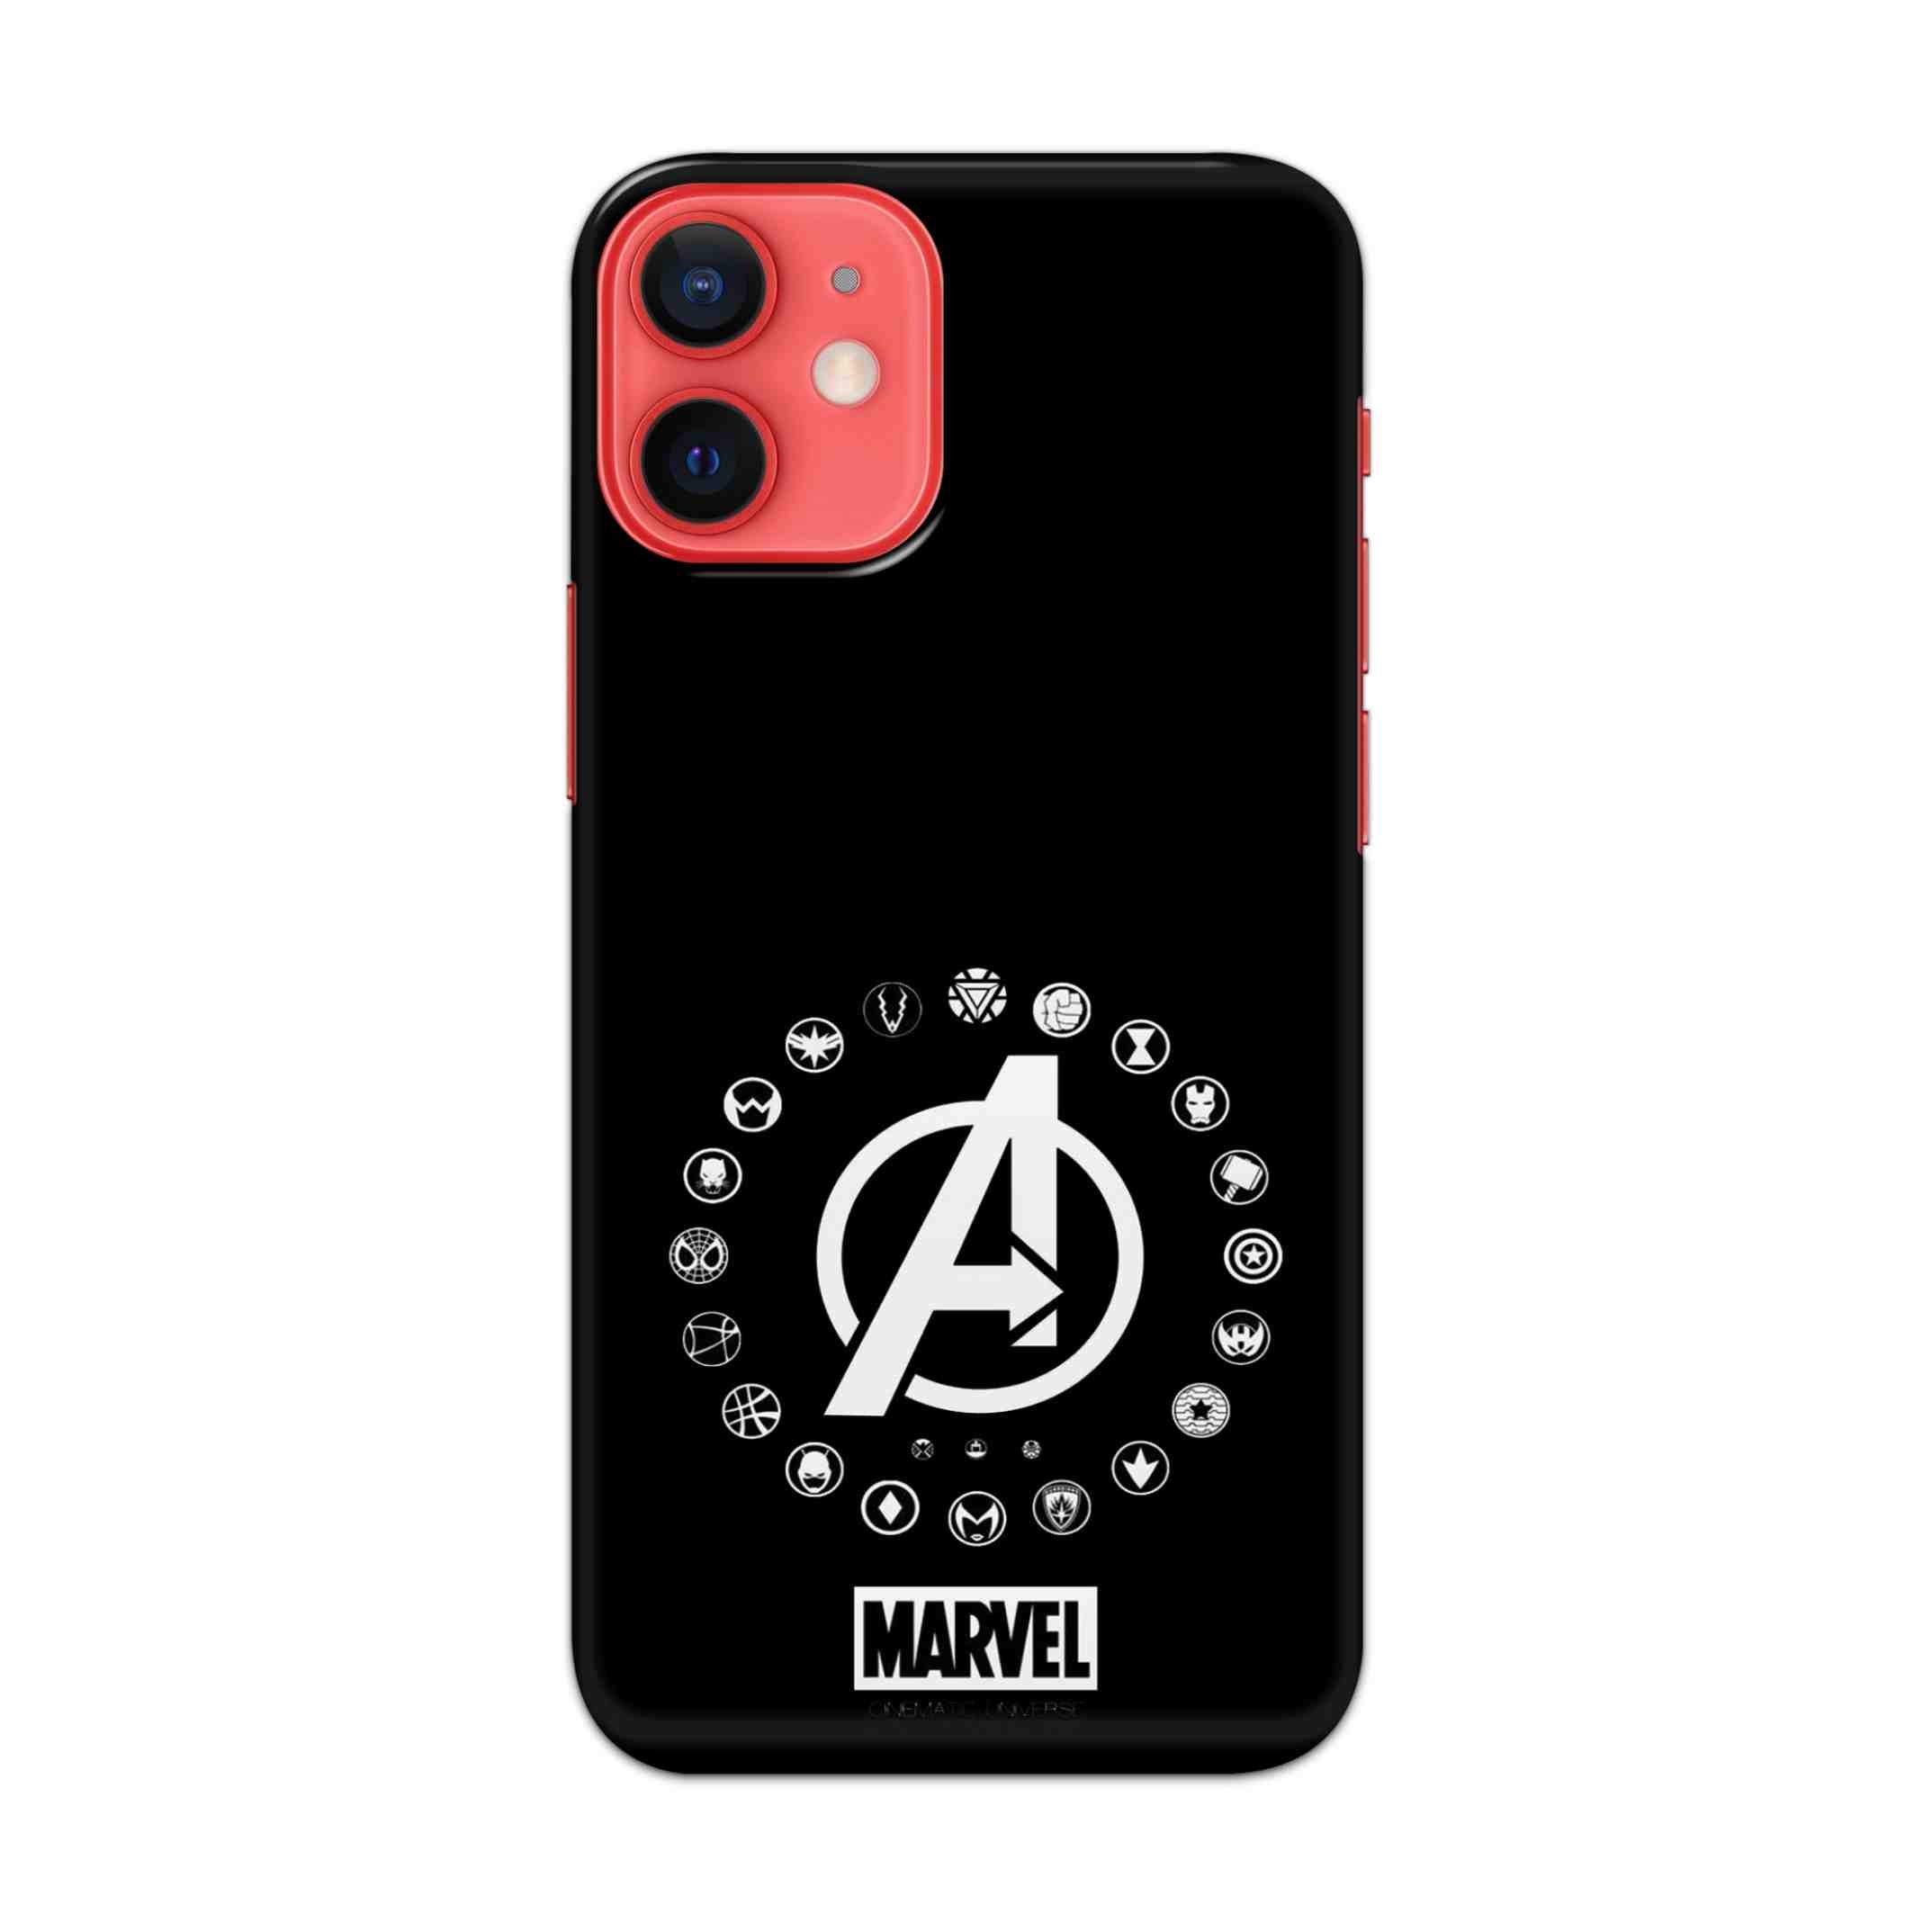 Buy Avengers Hard Back Mobile Phone Case/Cover For Apple iPhone 12 mini Online